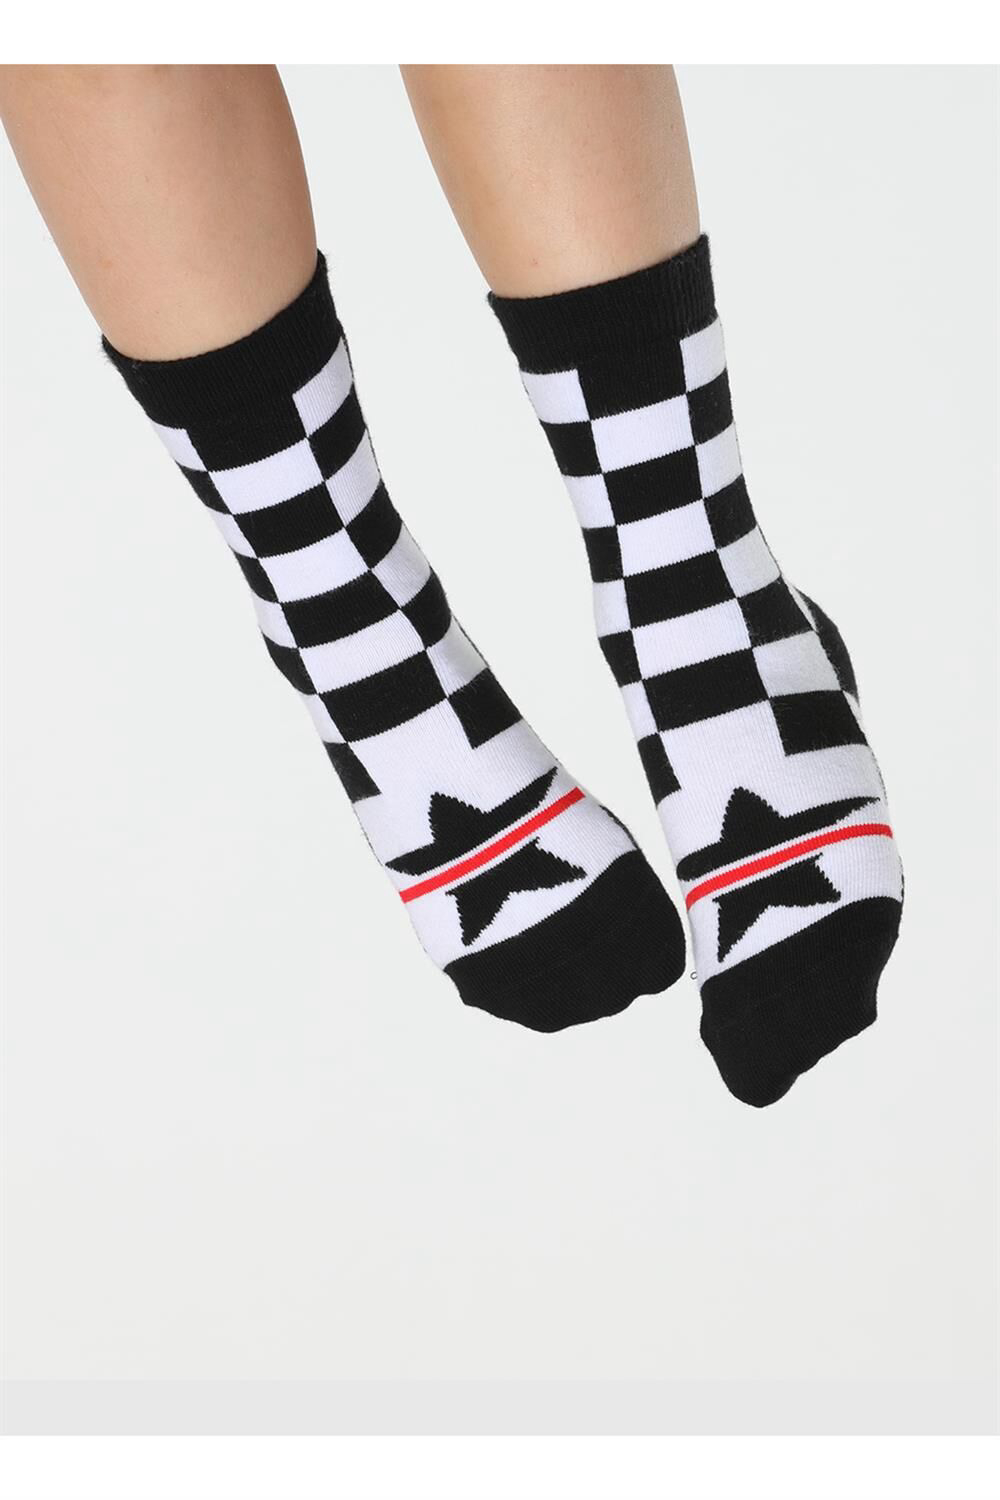 Socks - Children's Striped Socks